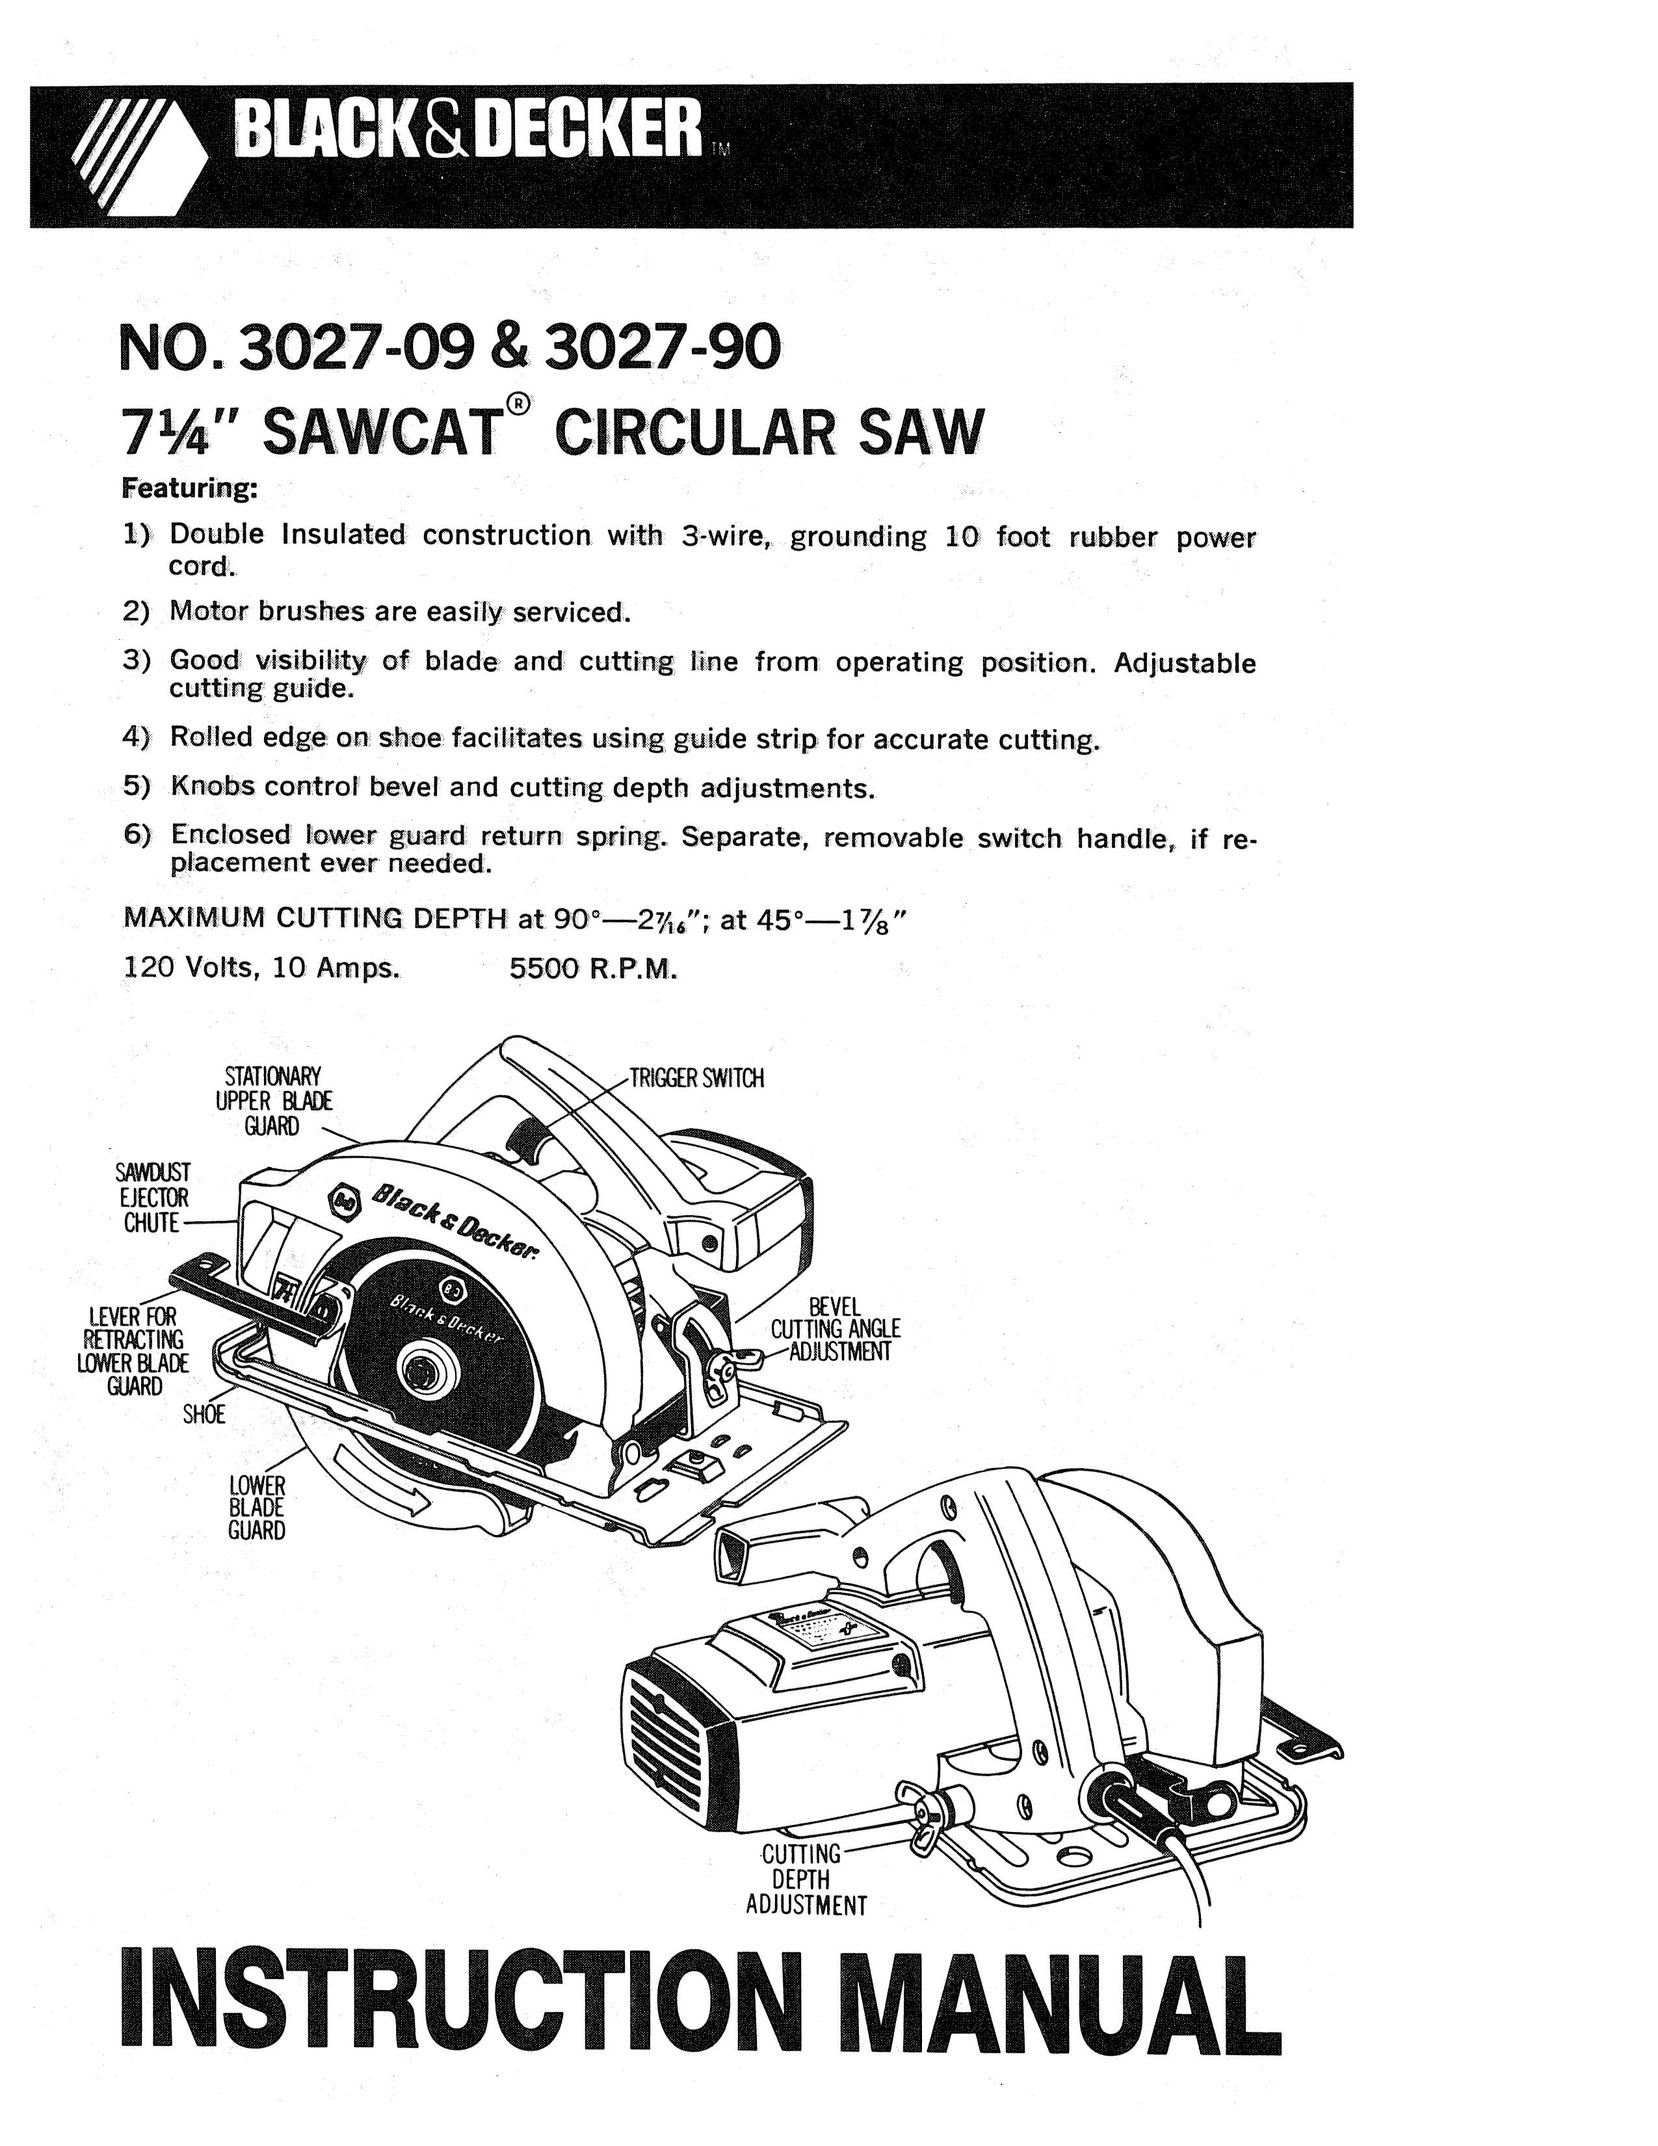 Black & Decker 3027-09 Saw User Manual